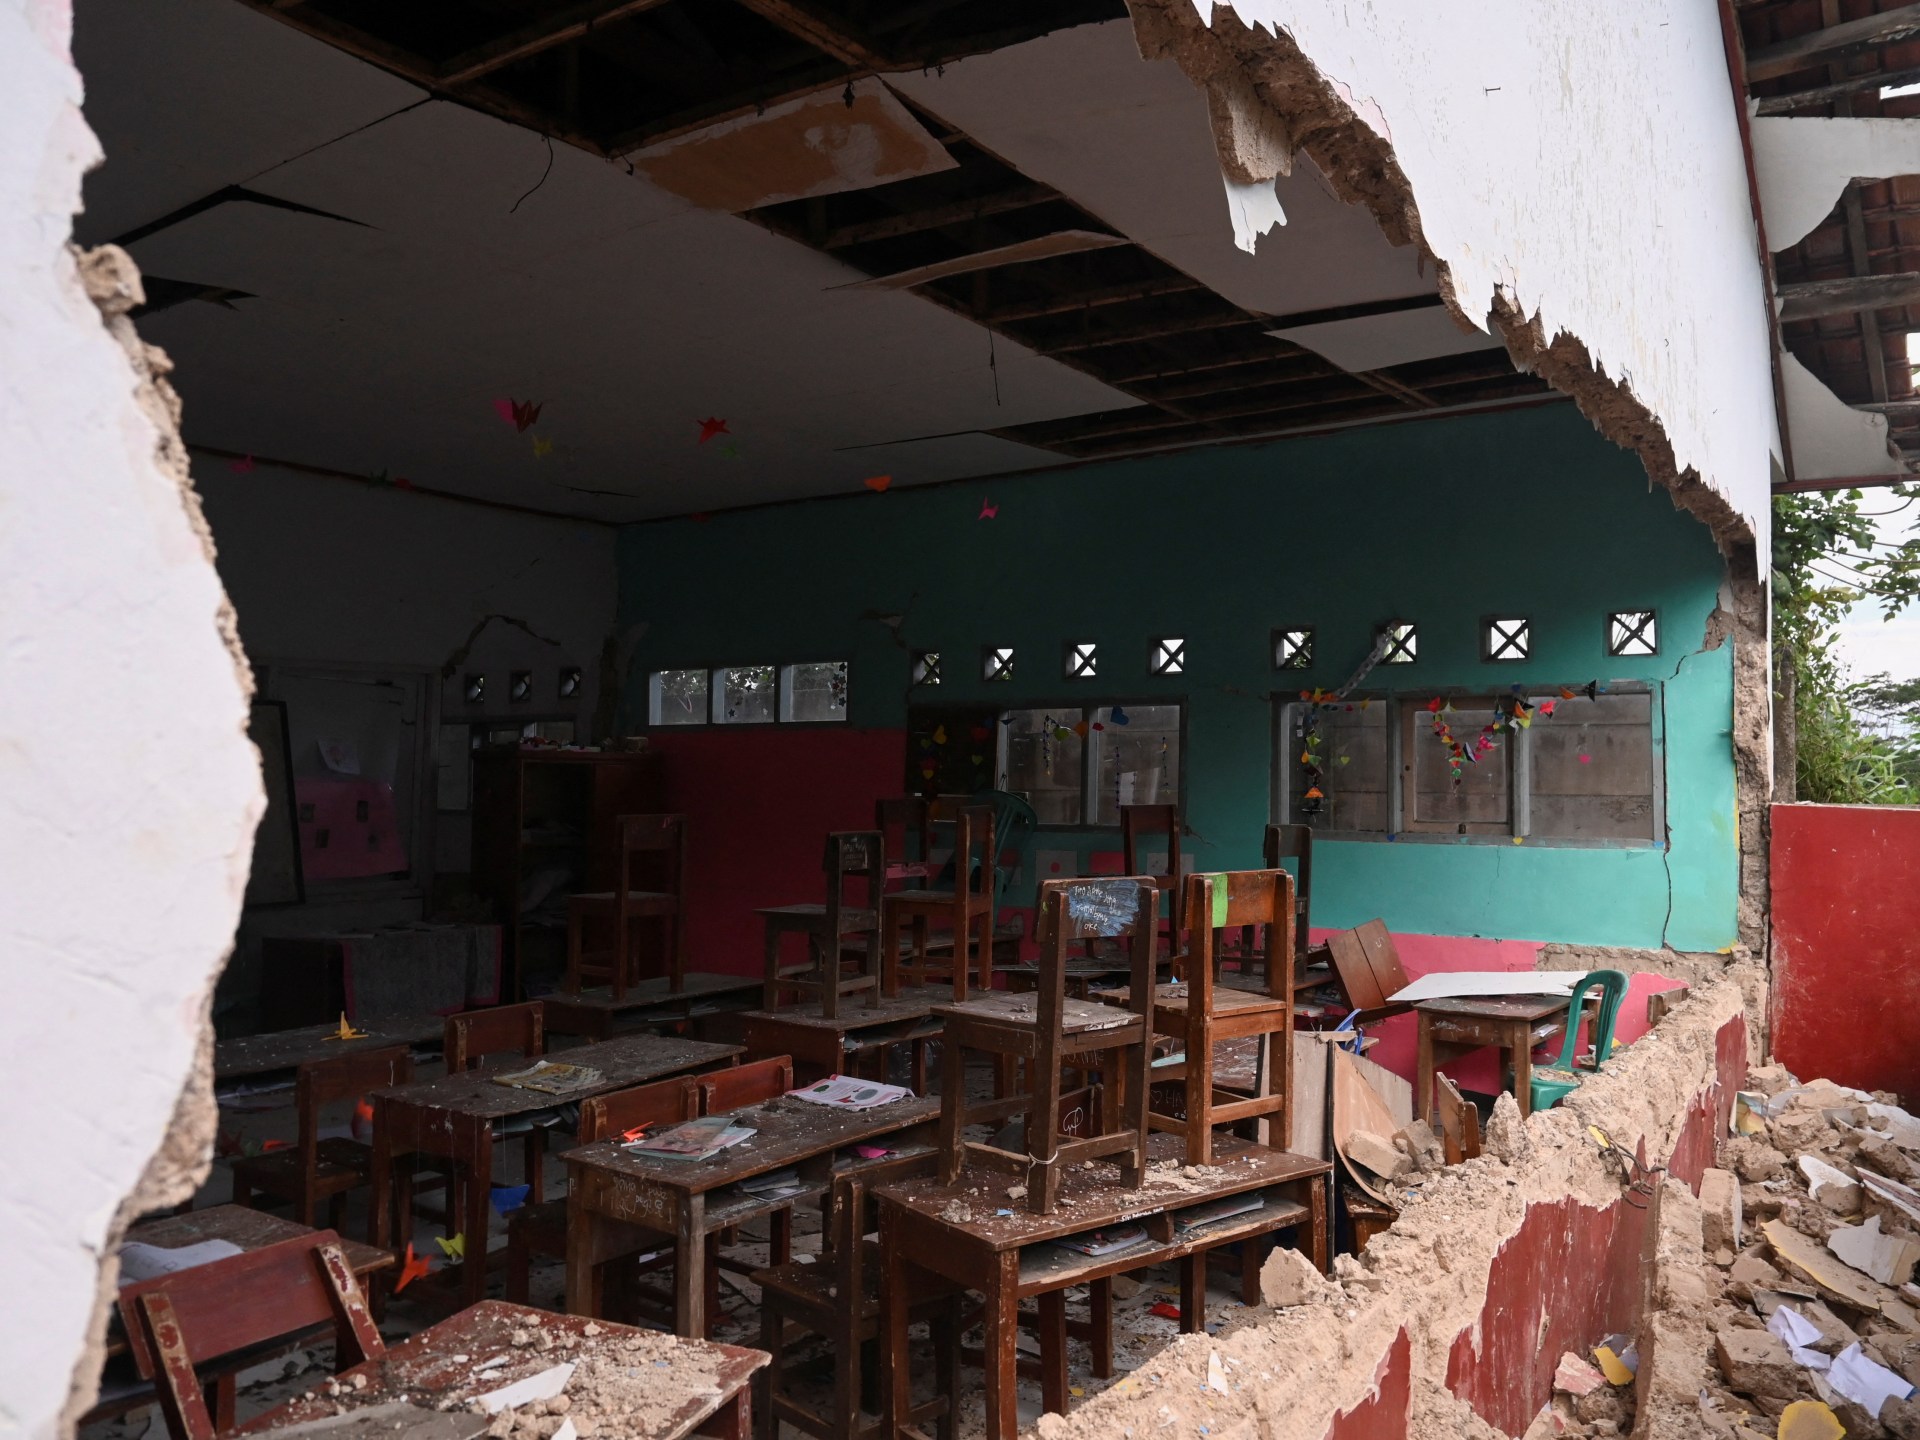 Photographs: Indonesia quake kills scores, reduces houses to rubble